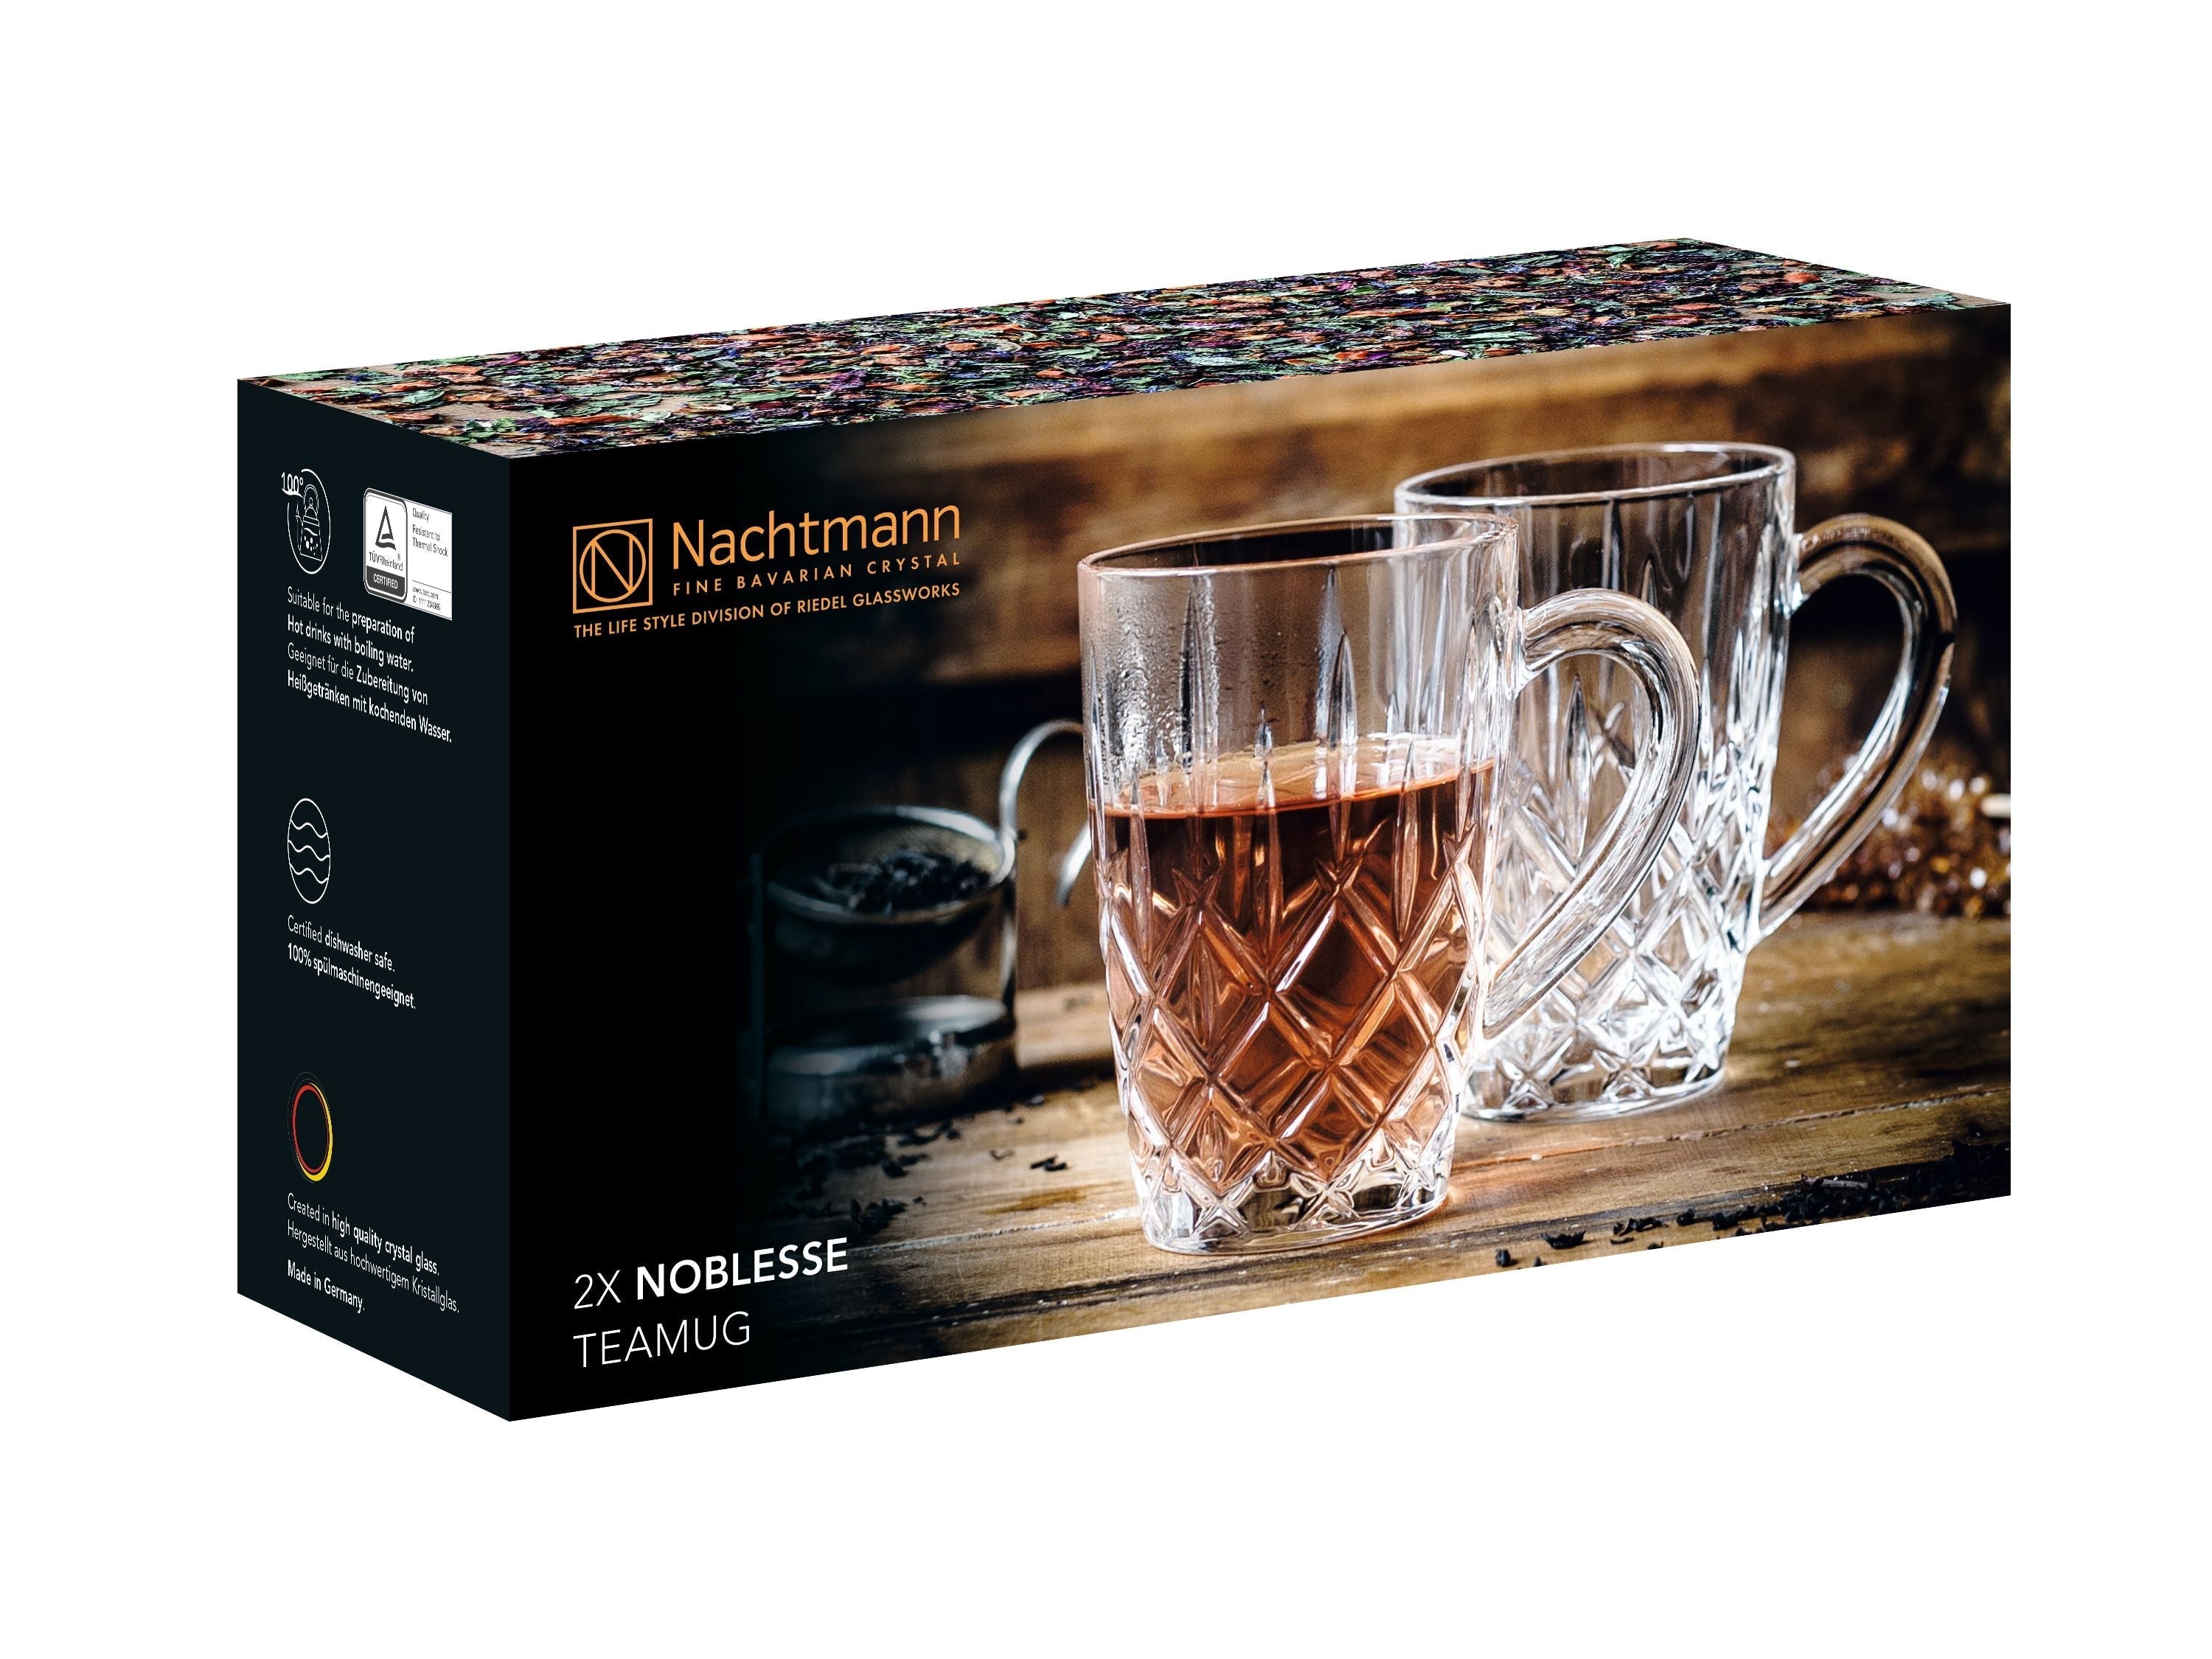 Taza Nachtmann Noblesse para bebidas calientes, conjunto de 2